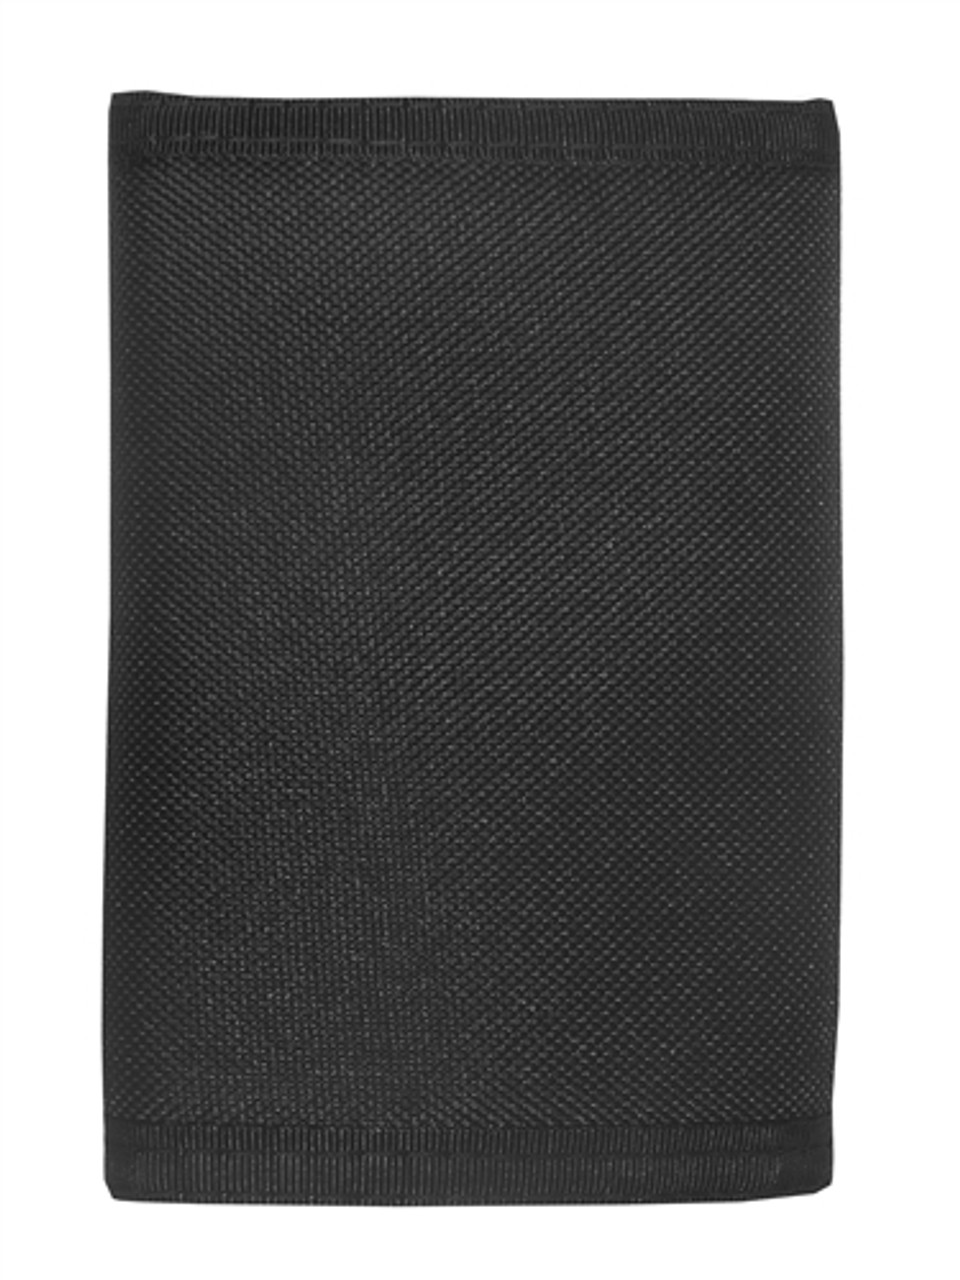 Black Tri-Fold Wallet | Military Luggage